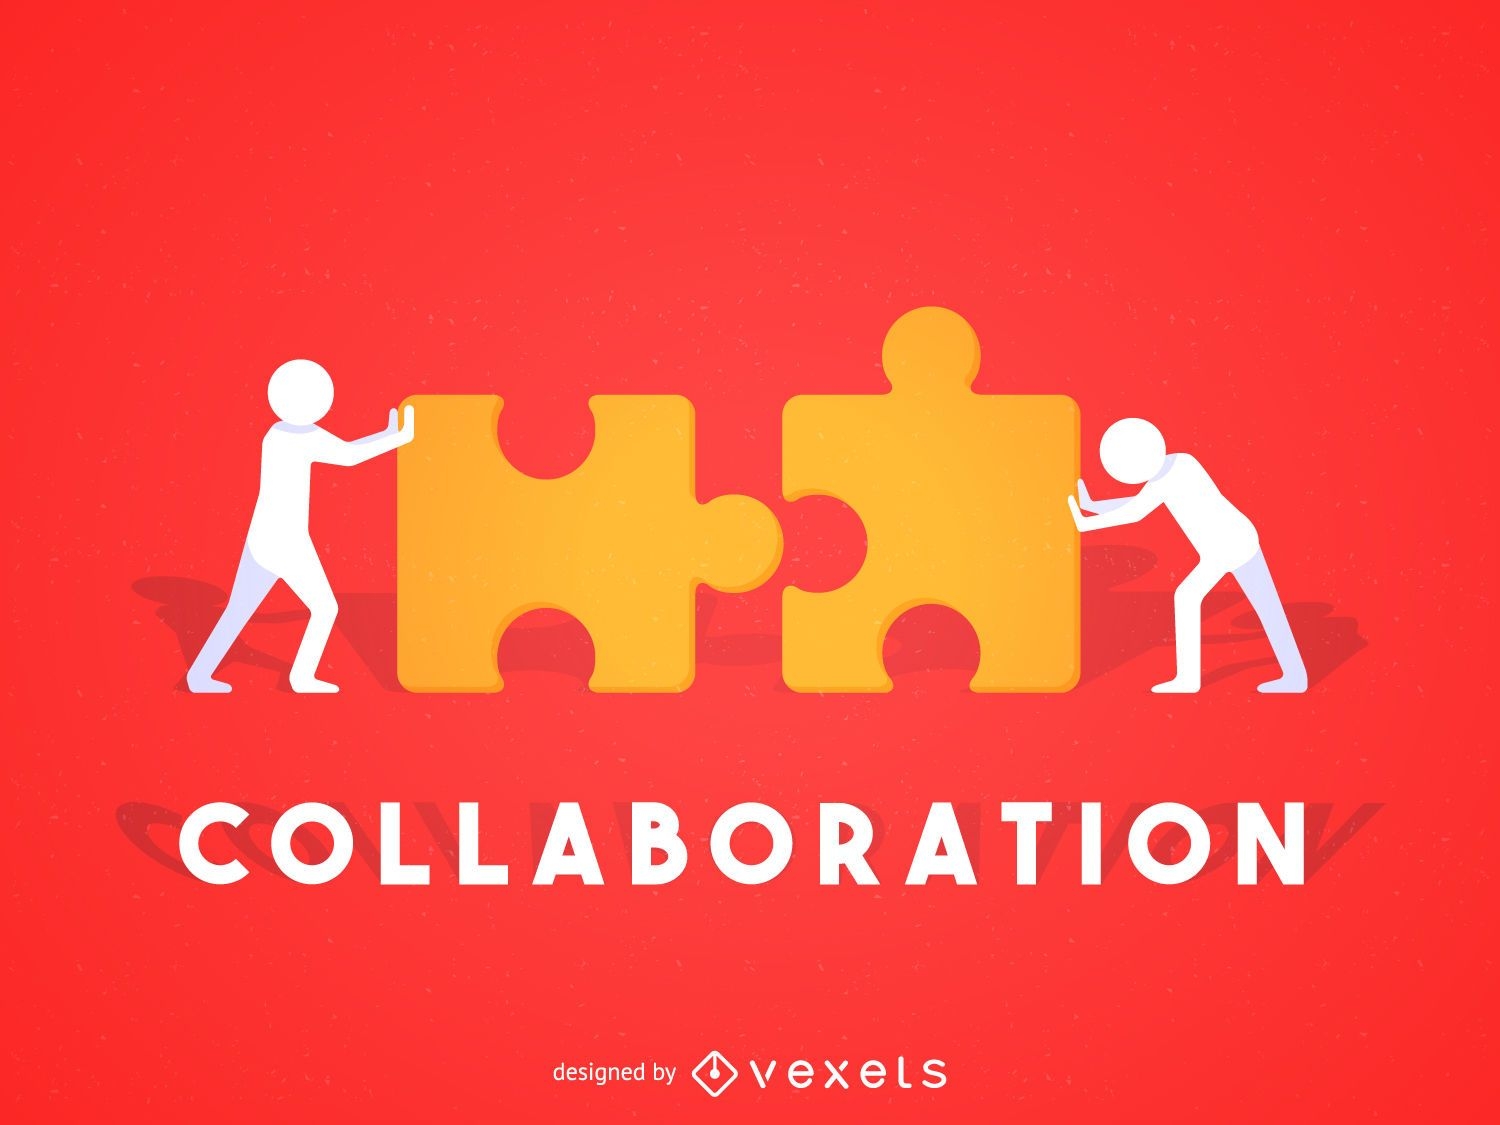 Collaboration concept illustration